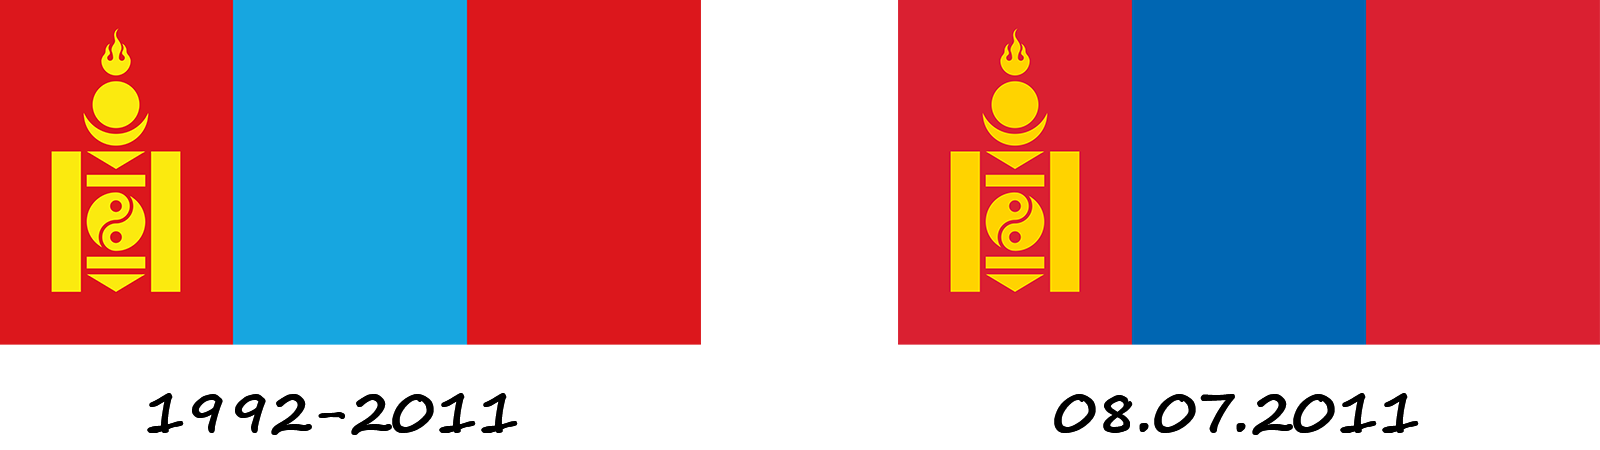 History of the Mongolian flag